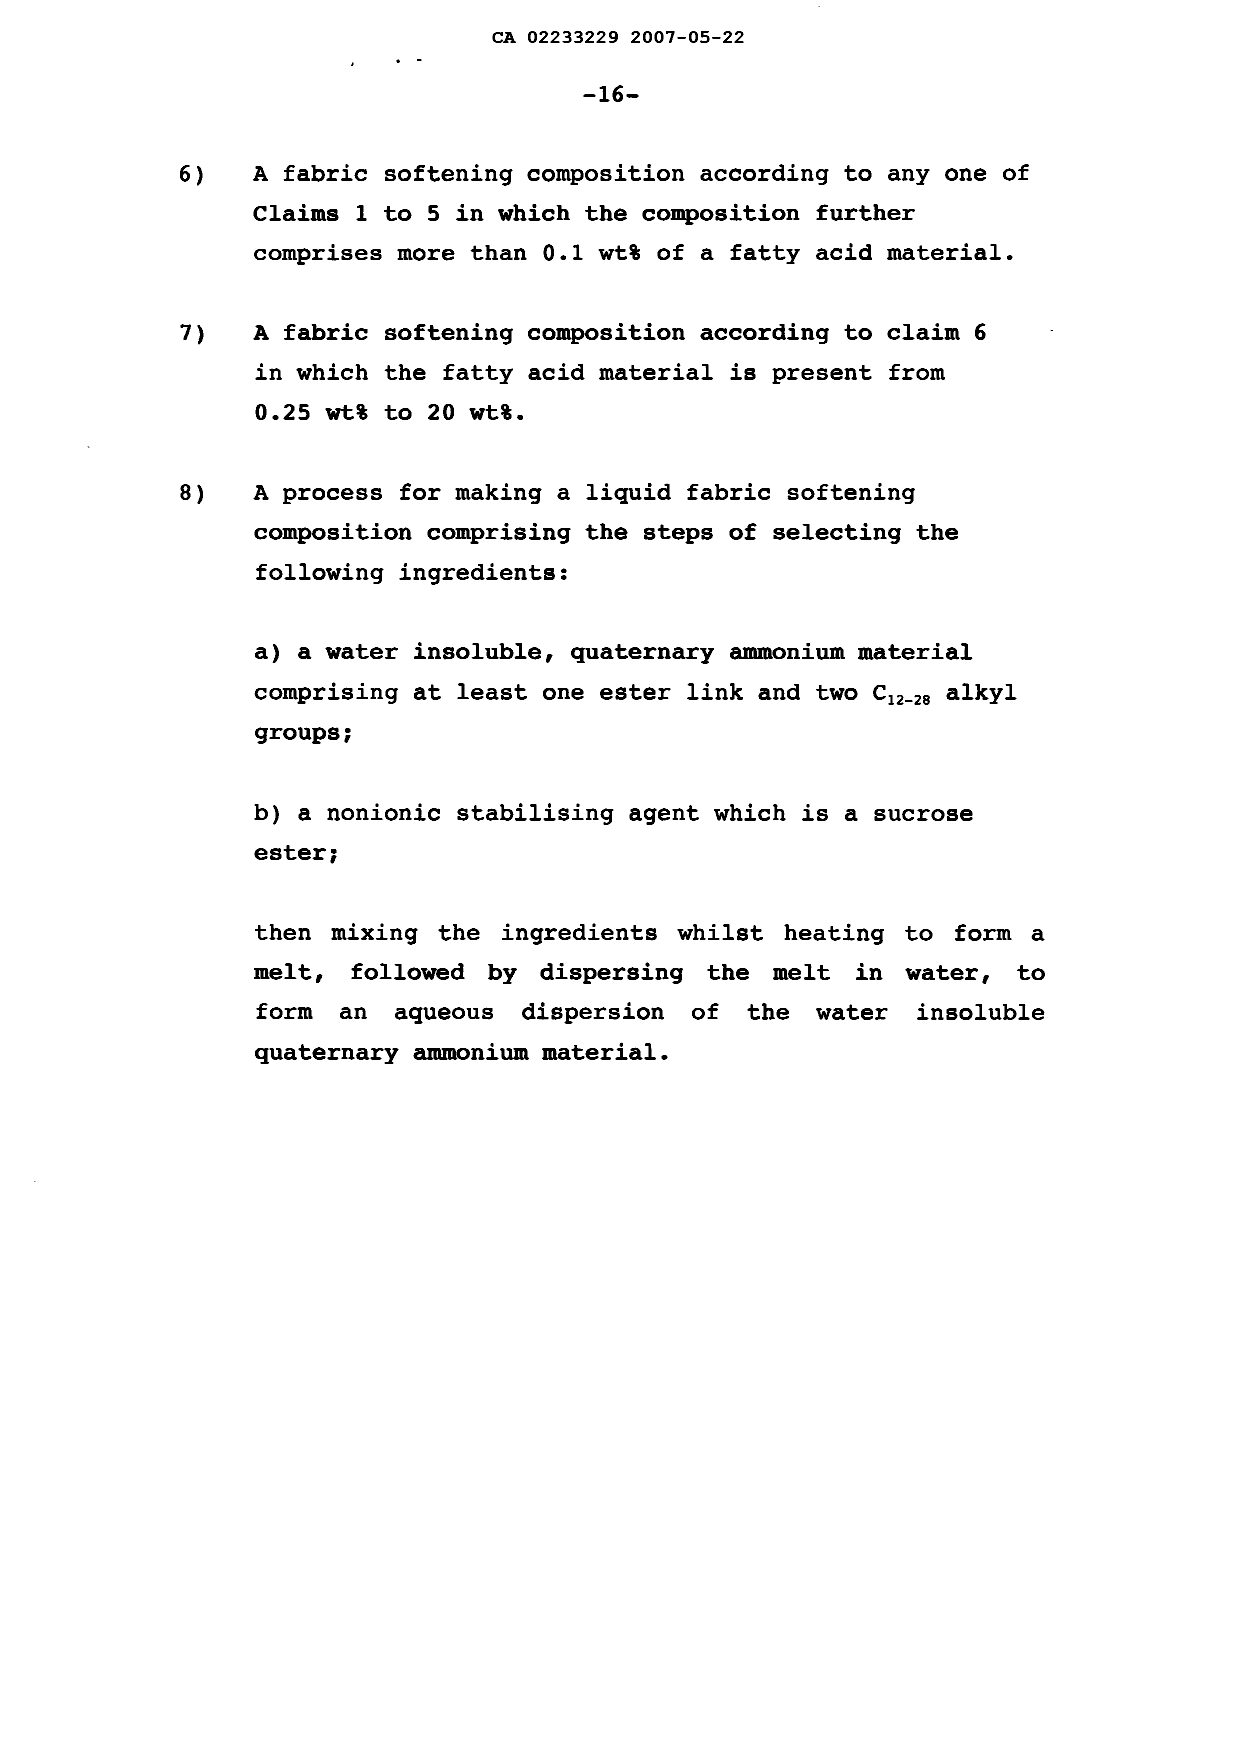 Canadian Patent Document 2233229. Prosecution-Amendment 20070522. Image 7 of 7